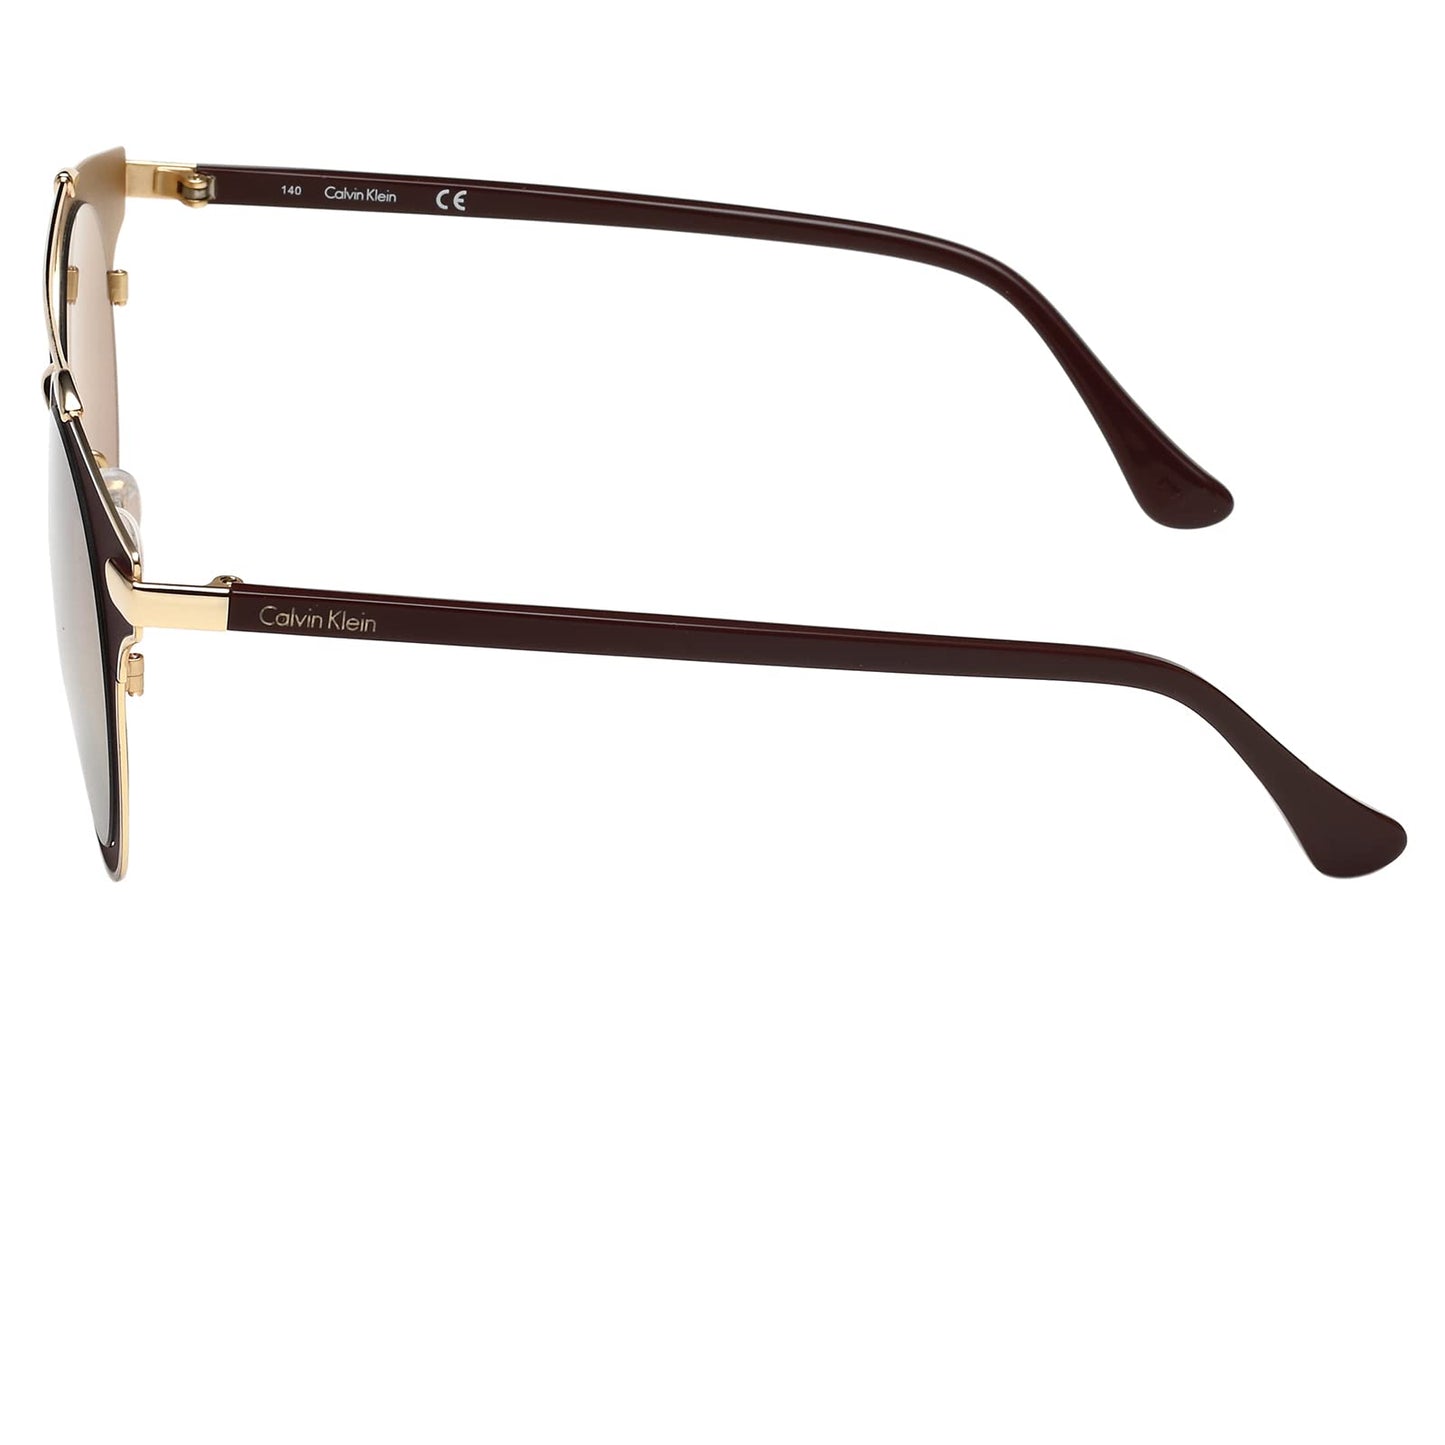 Calvin Klein Mirrored Round Women Sunglasses - (CK 2149 609 50 S |50| Brown Color Lens)